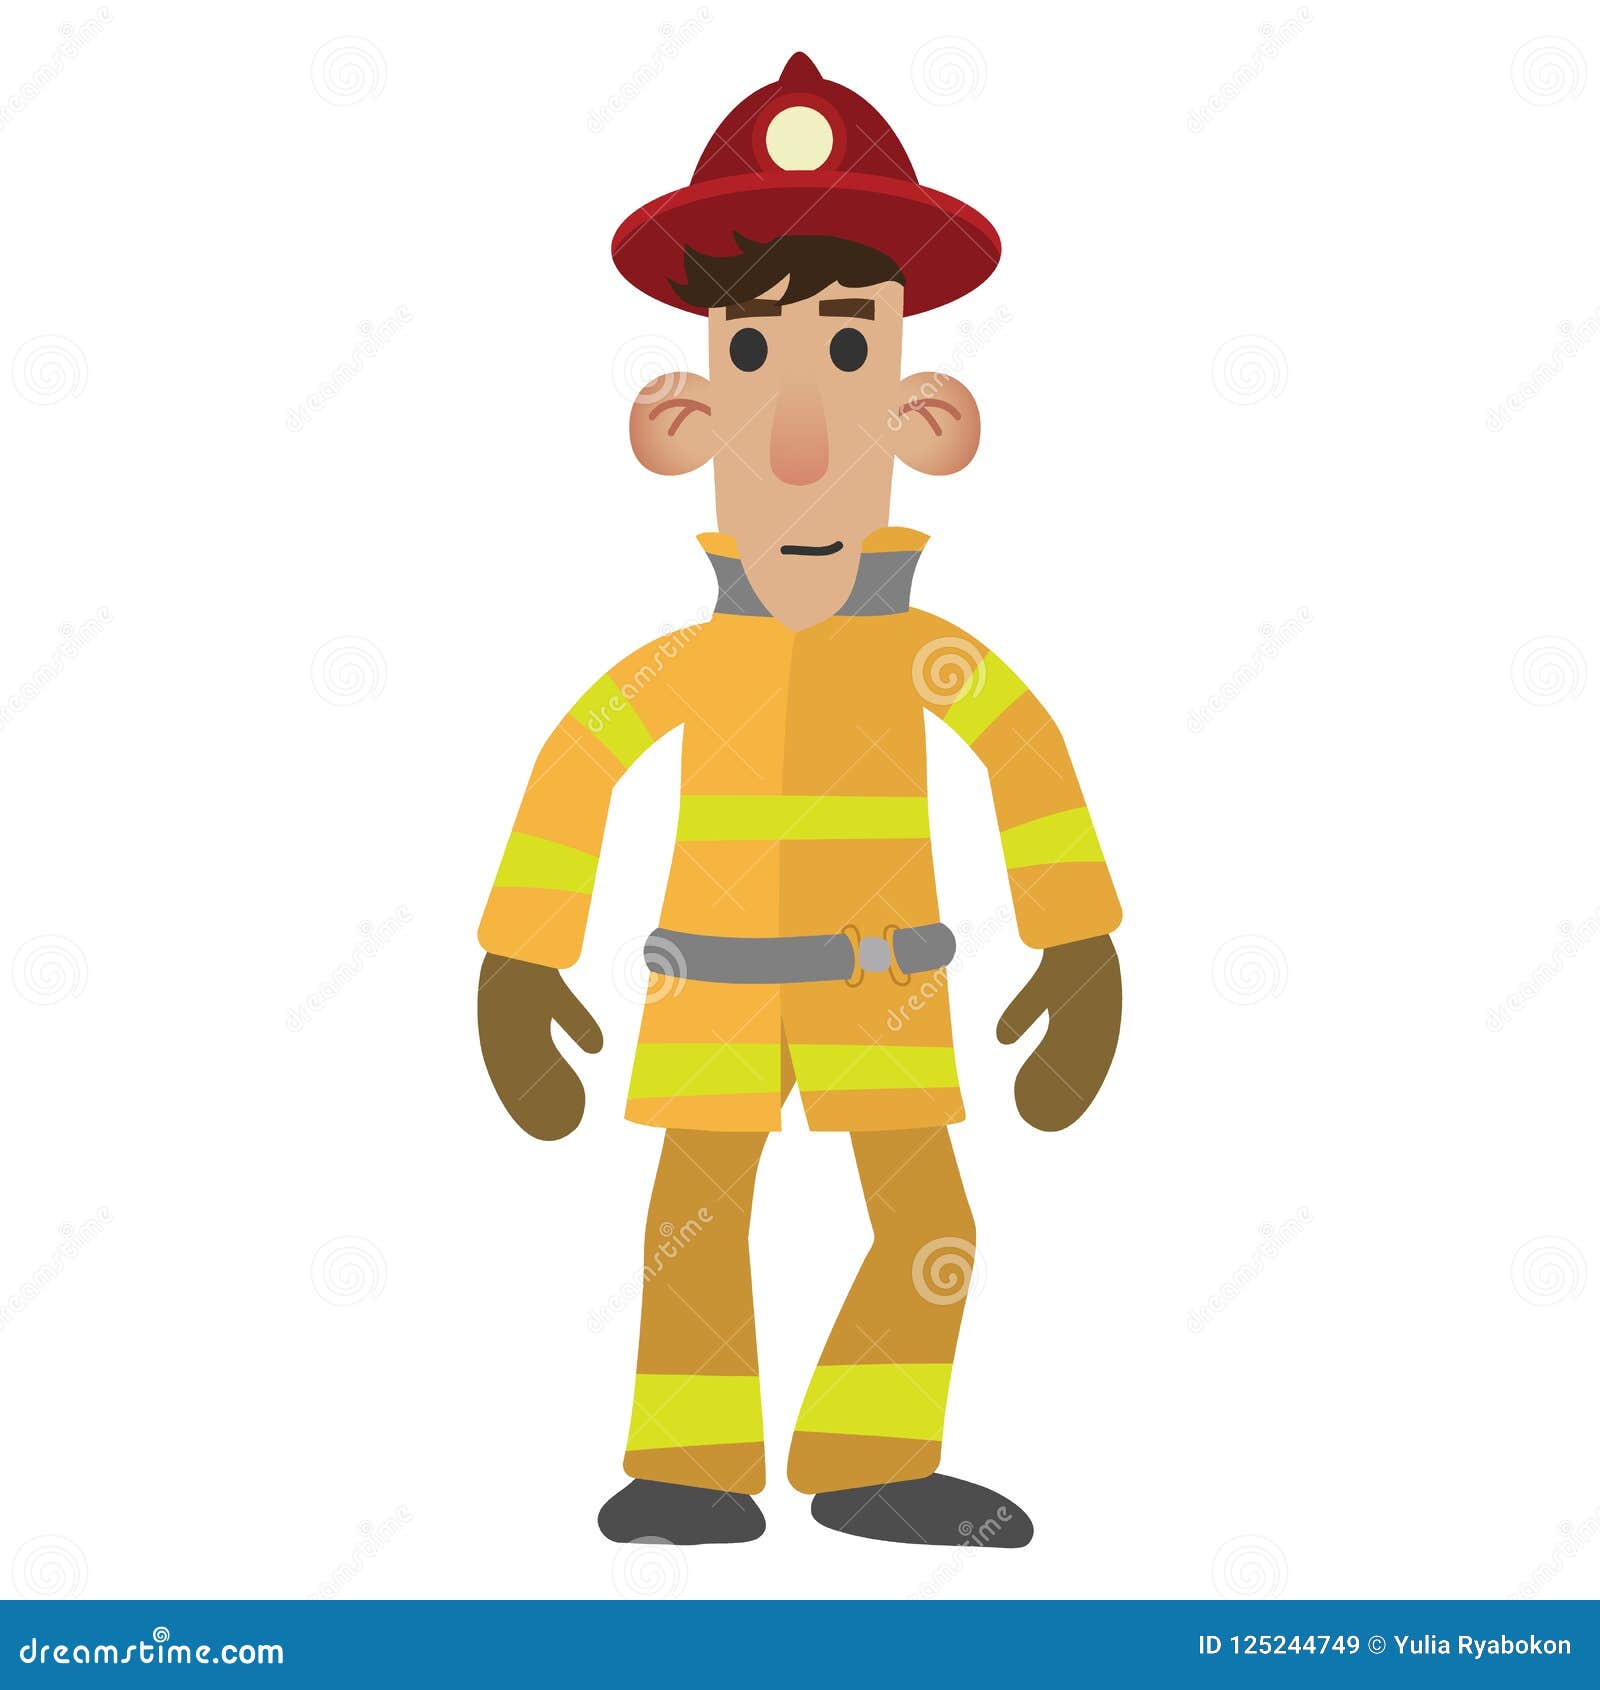 Firefighter Cartoon Character Stock Illustration - Illustration of clipart,  firehose: 125244749